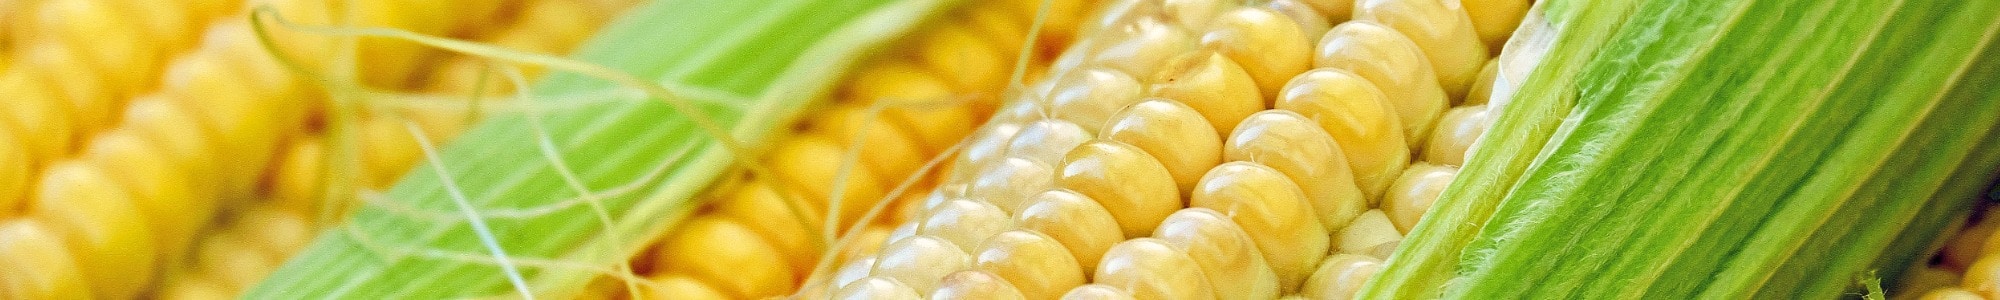 Corn banner image